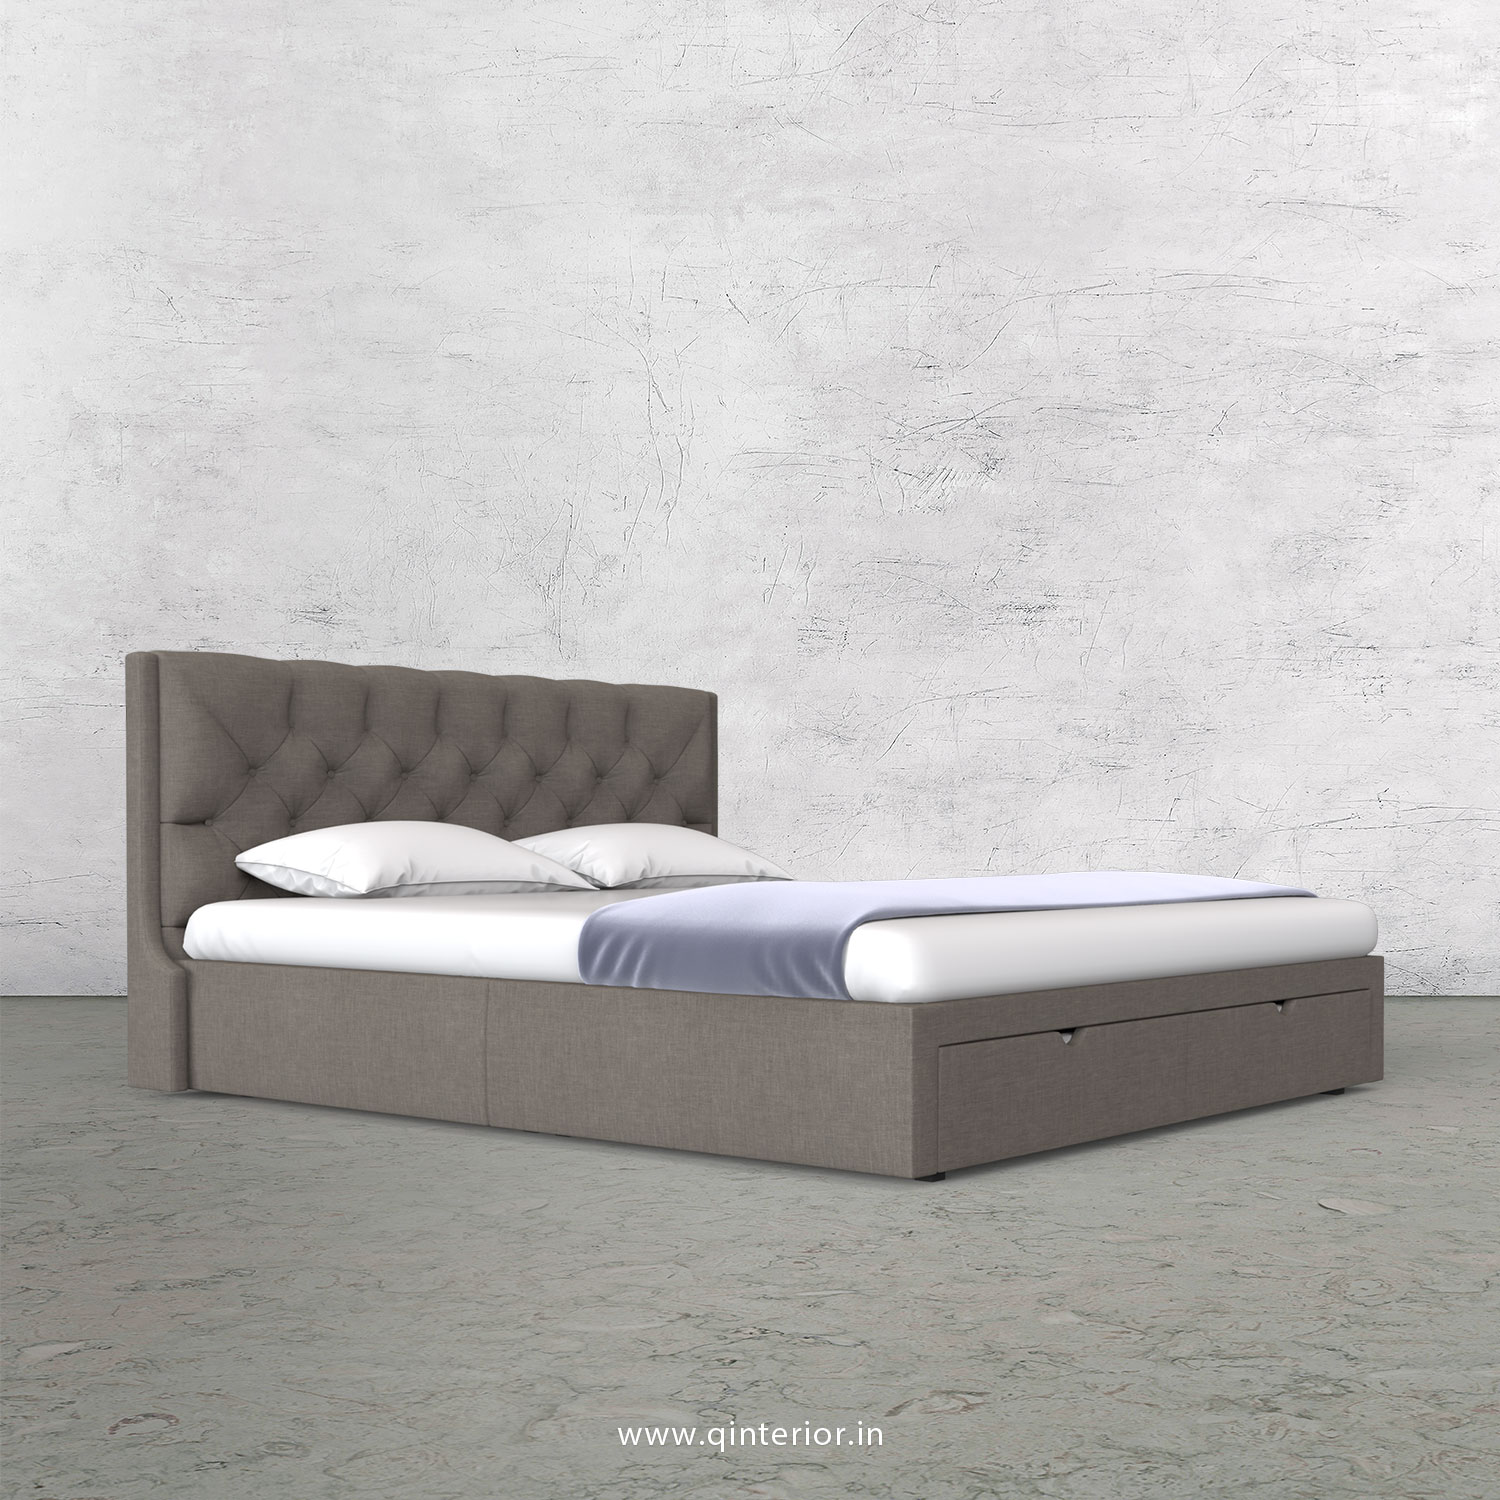 Scorpius King Size Storage Bed in Cotton Plain - KBD001 CP11